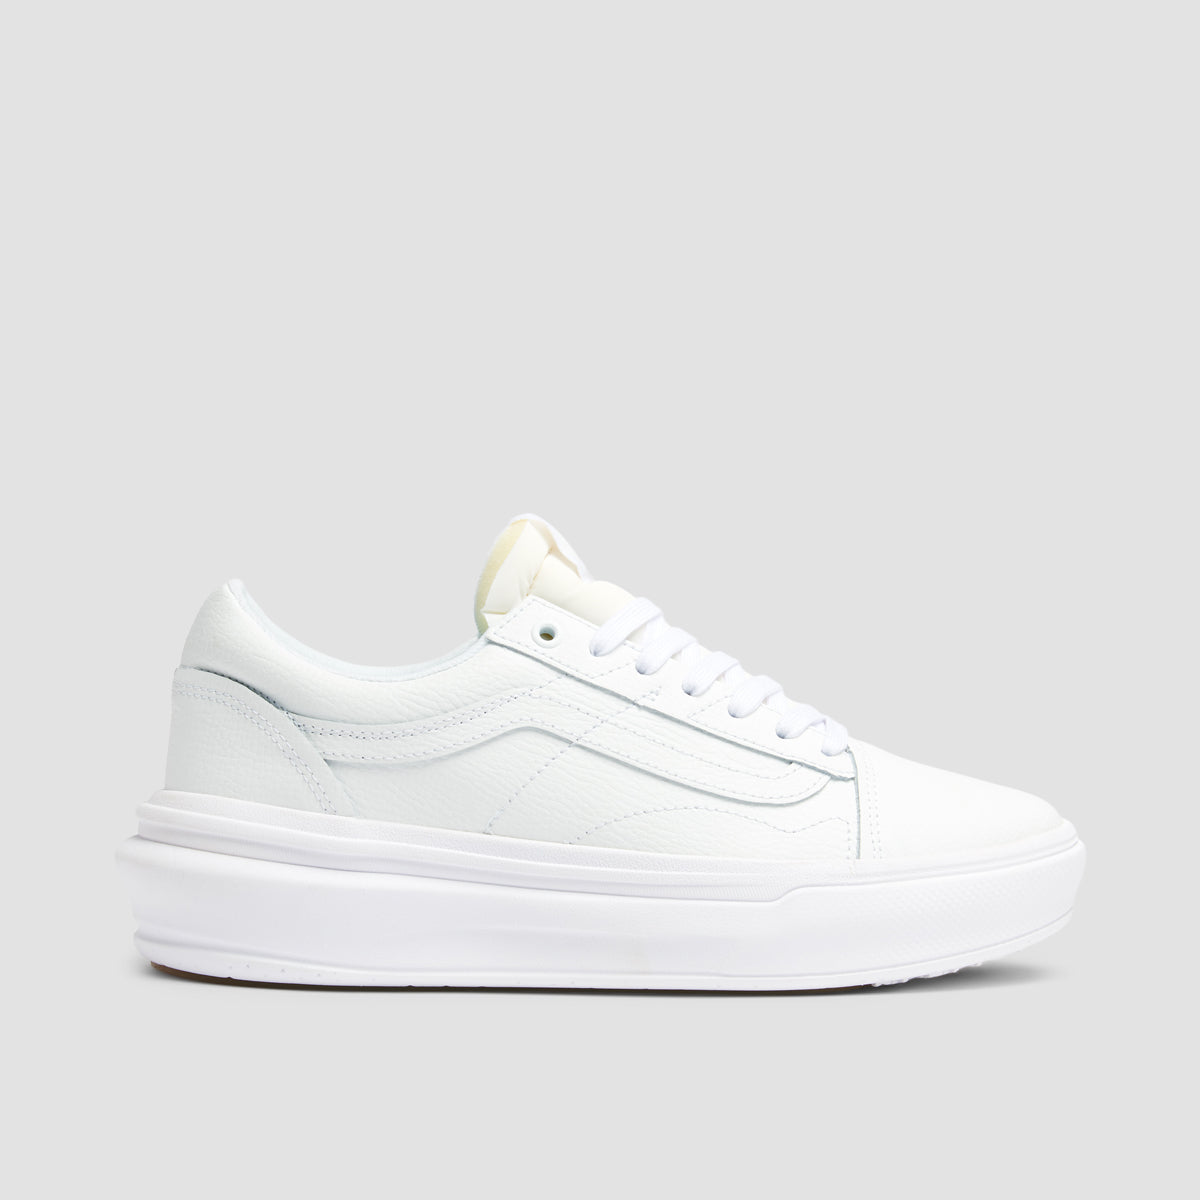 Vans Old Skool Overt CC Shoes - Leather True White/True White